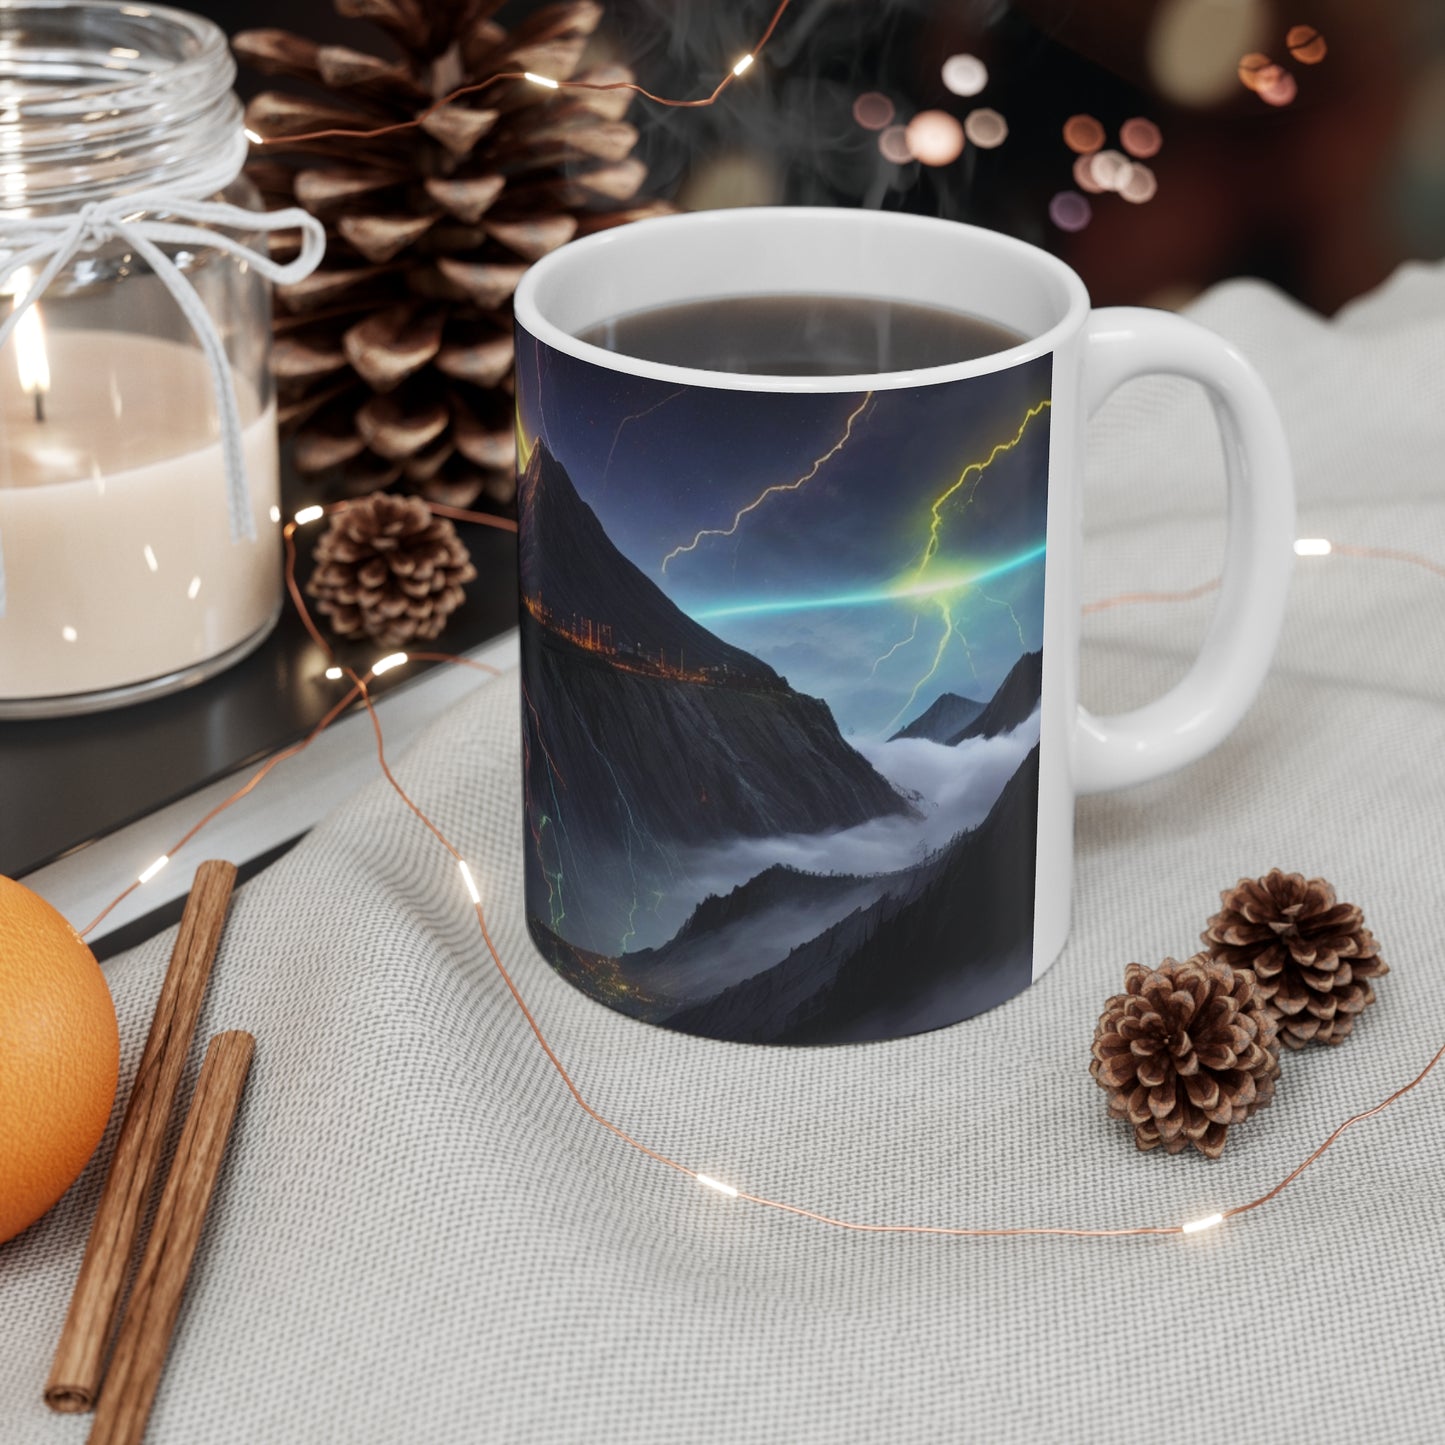 Colourful Lightning Bolts On Mountain Mug - Ceramic Coffee Mug 11oz